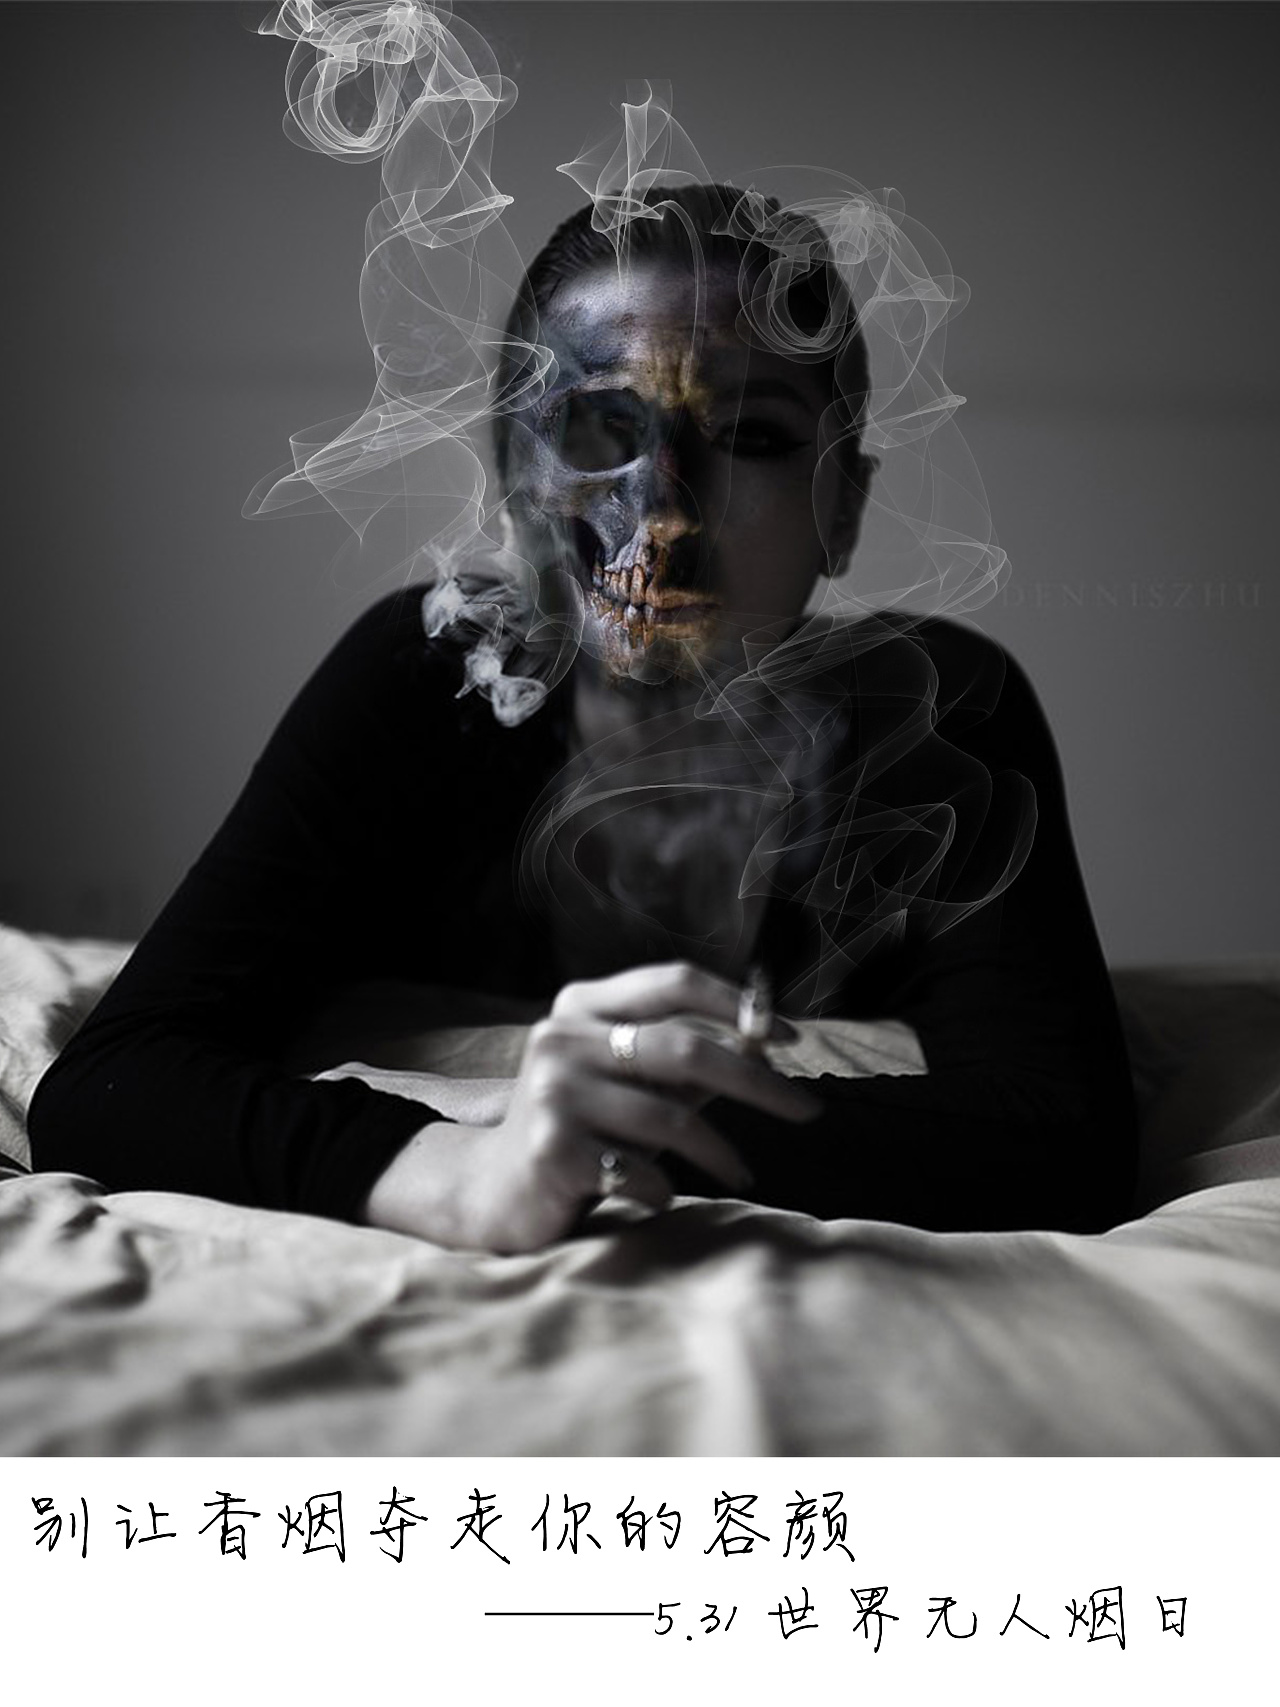 Smoke Girl Wallpapers - Top Free Smoke Girl Backgrounds - WallpaperAccess